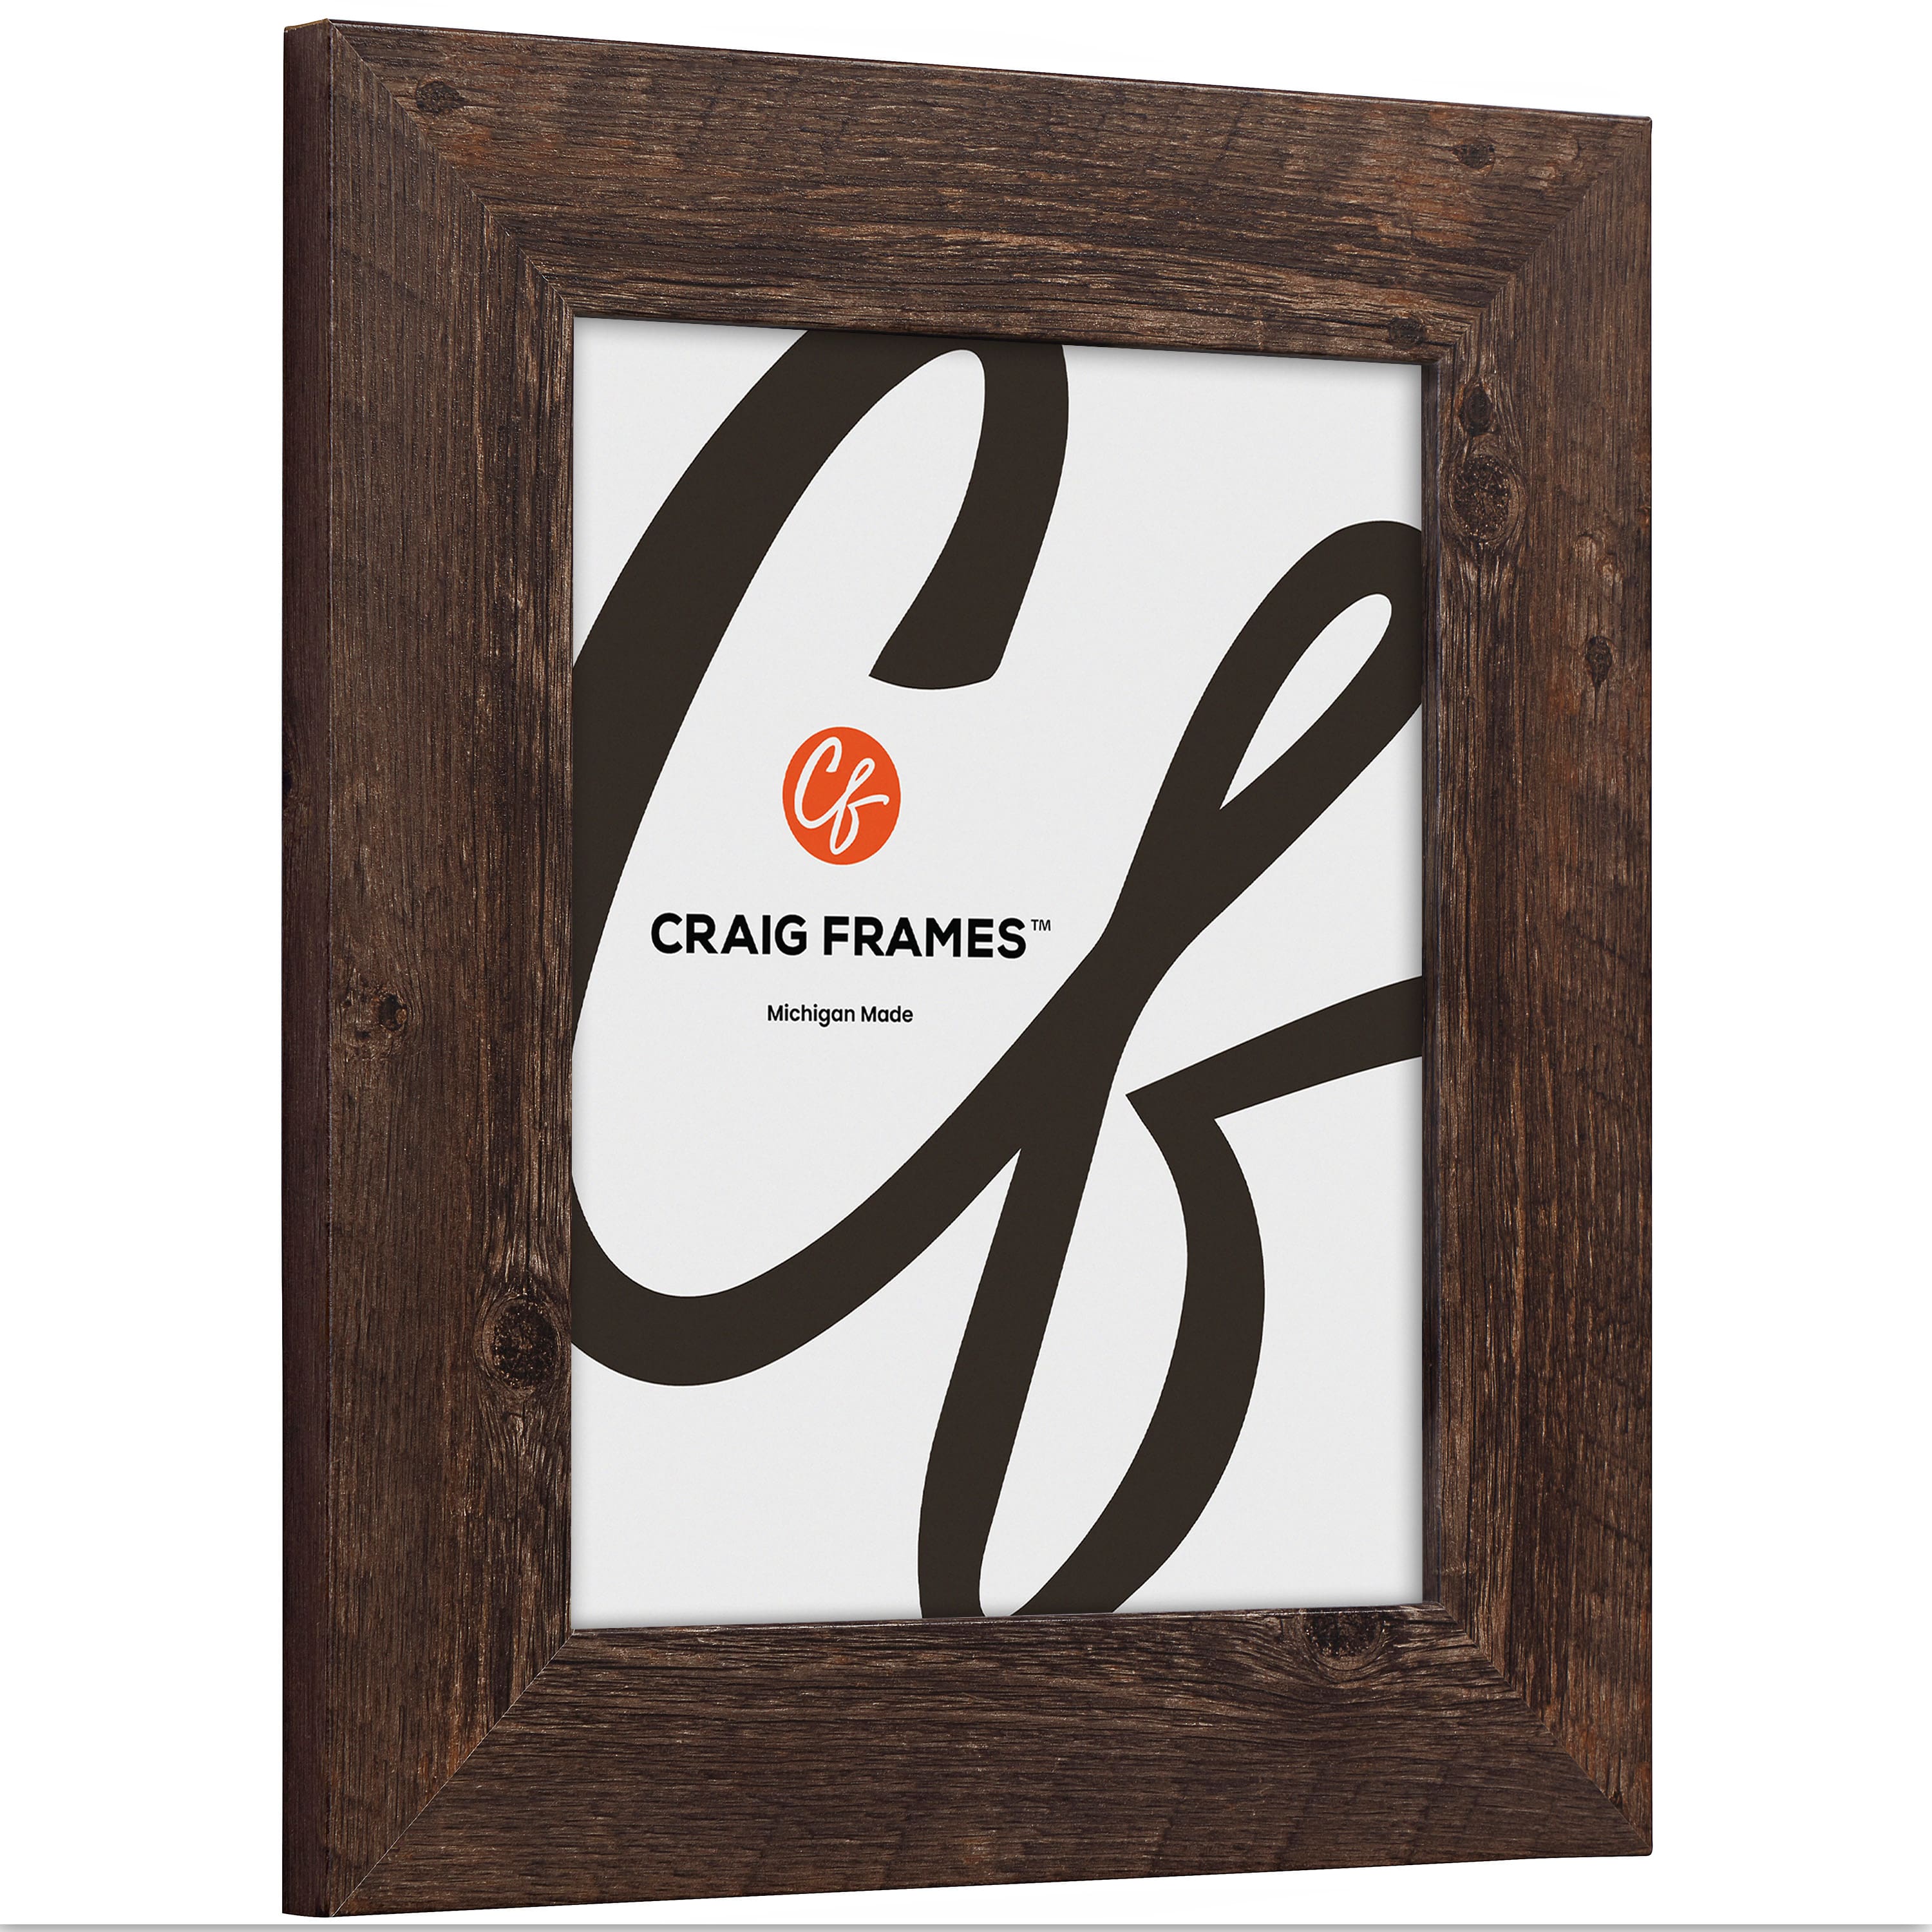 Craig Frames American Barn Brown Oak Picture Frame